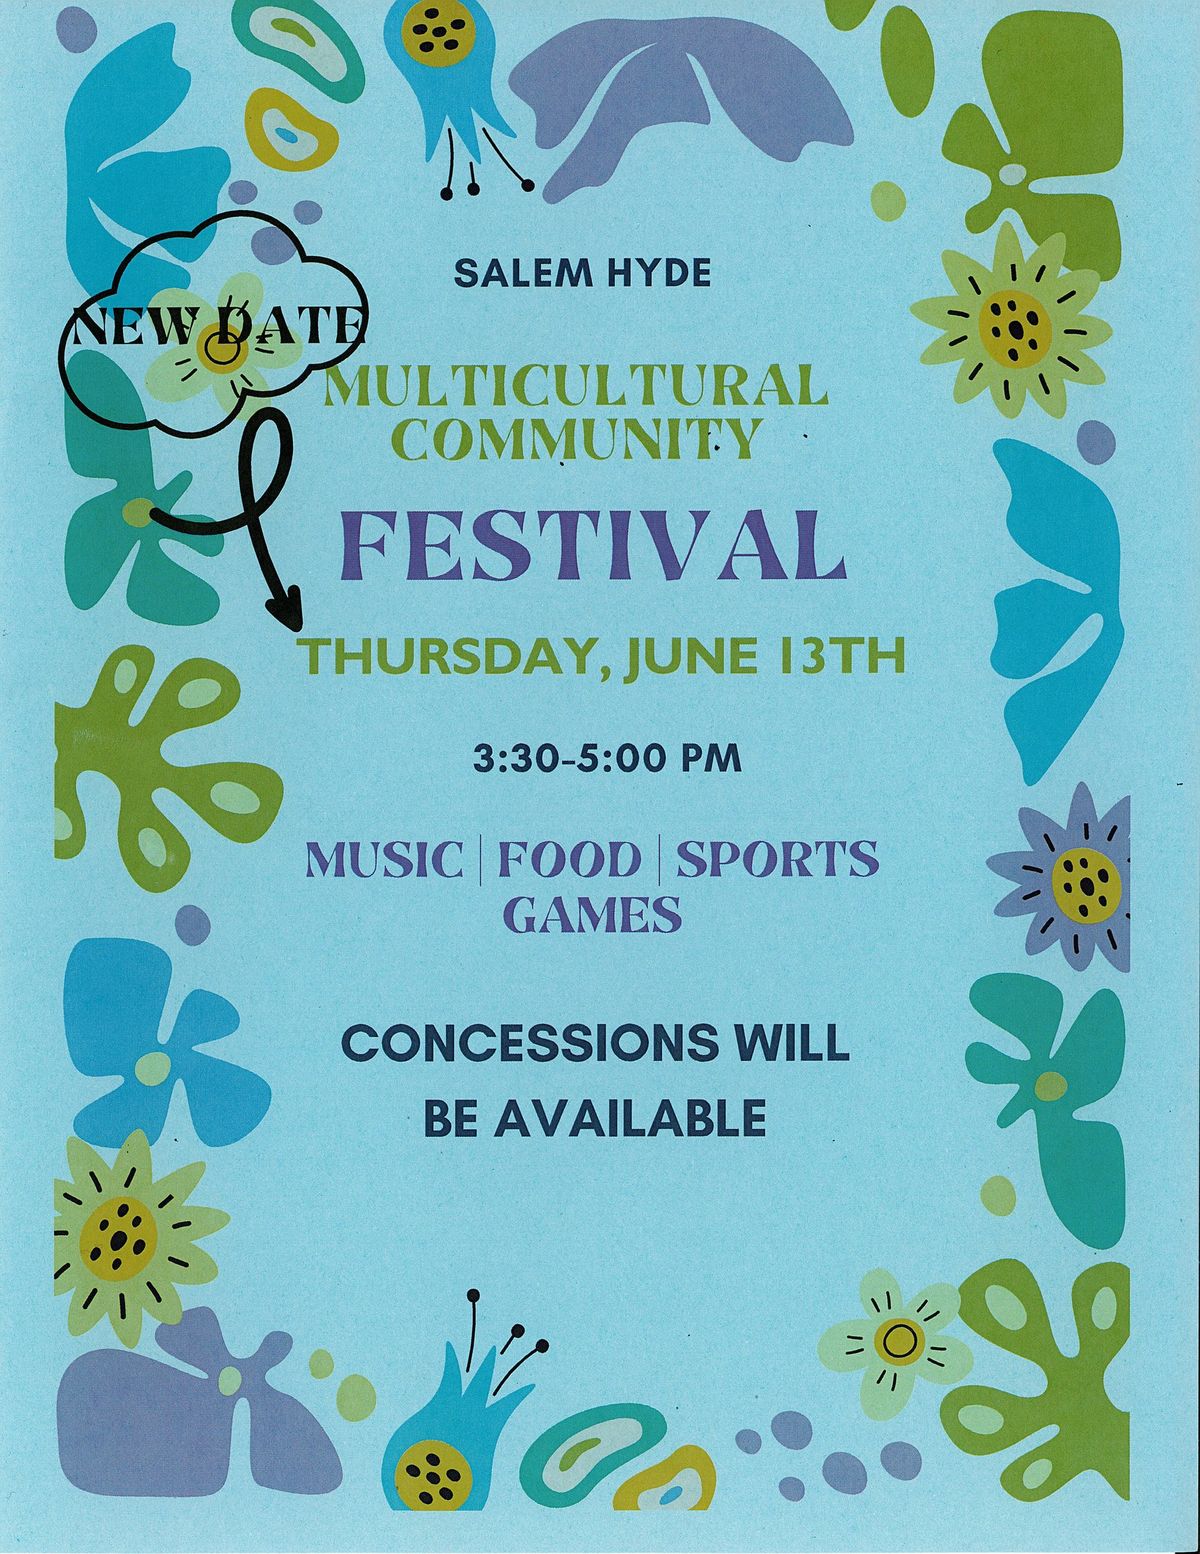 Multicultural Community Festival at Salem Hyde